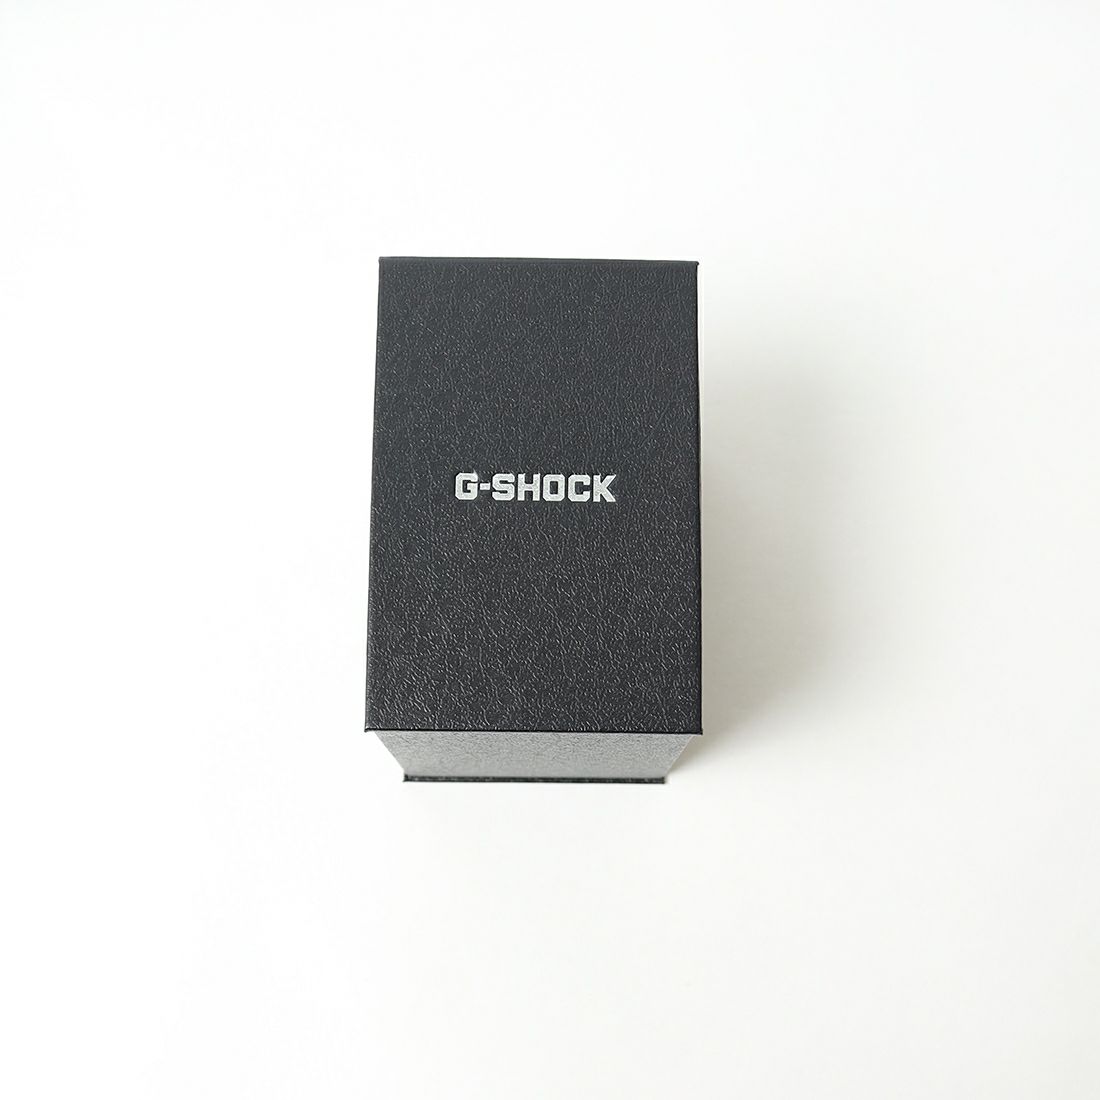 G-SHOCK [ジーショック] デジタルウォッチ [GW-M5610U-1JF]